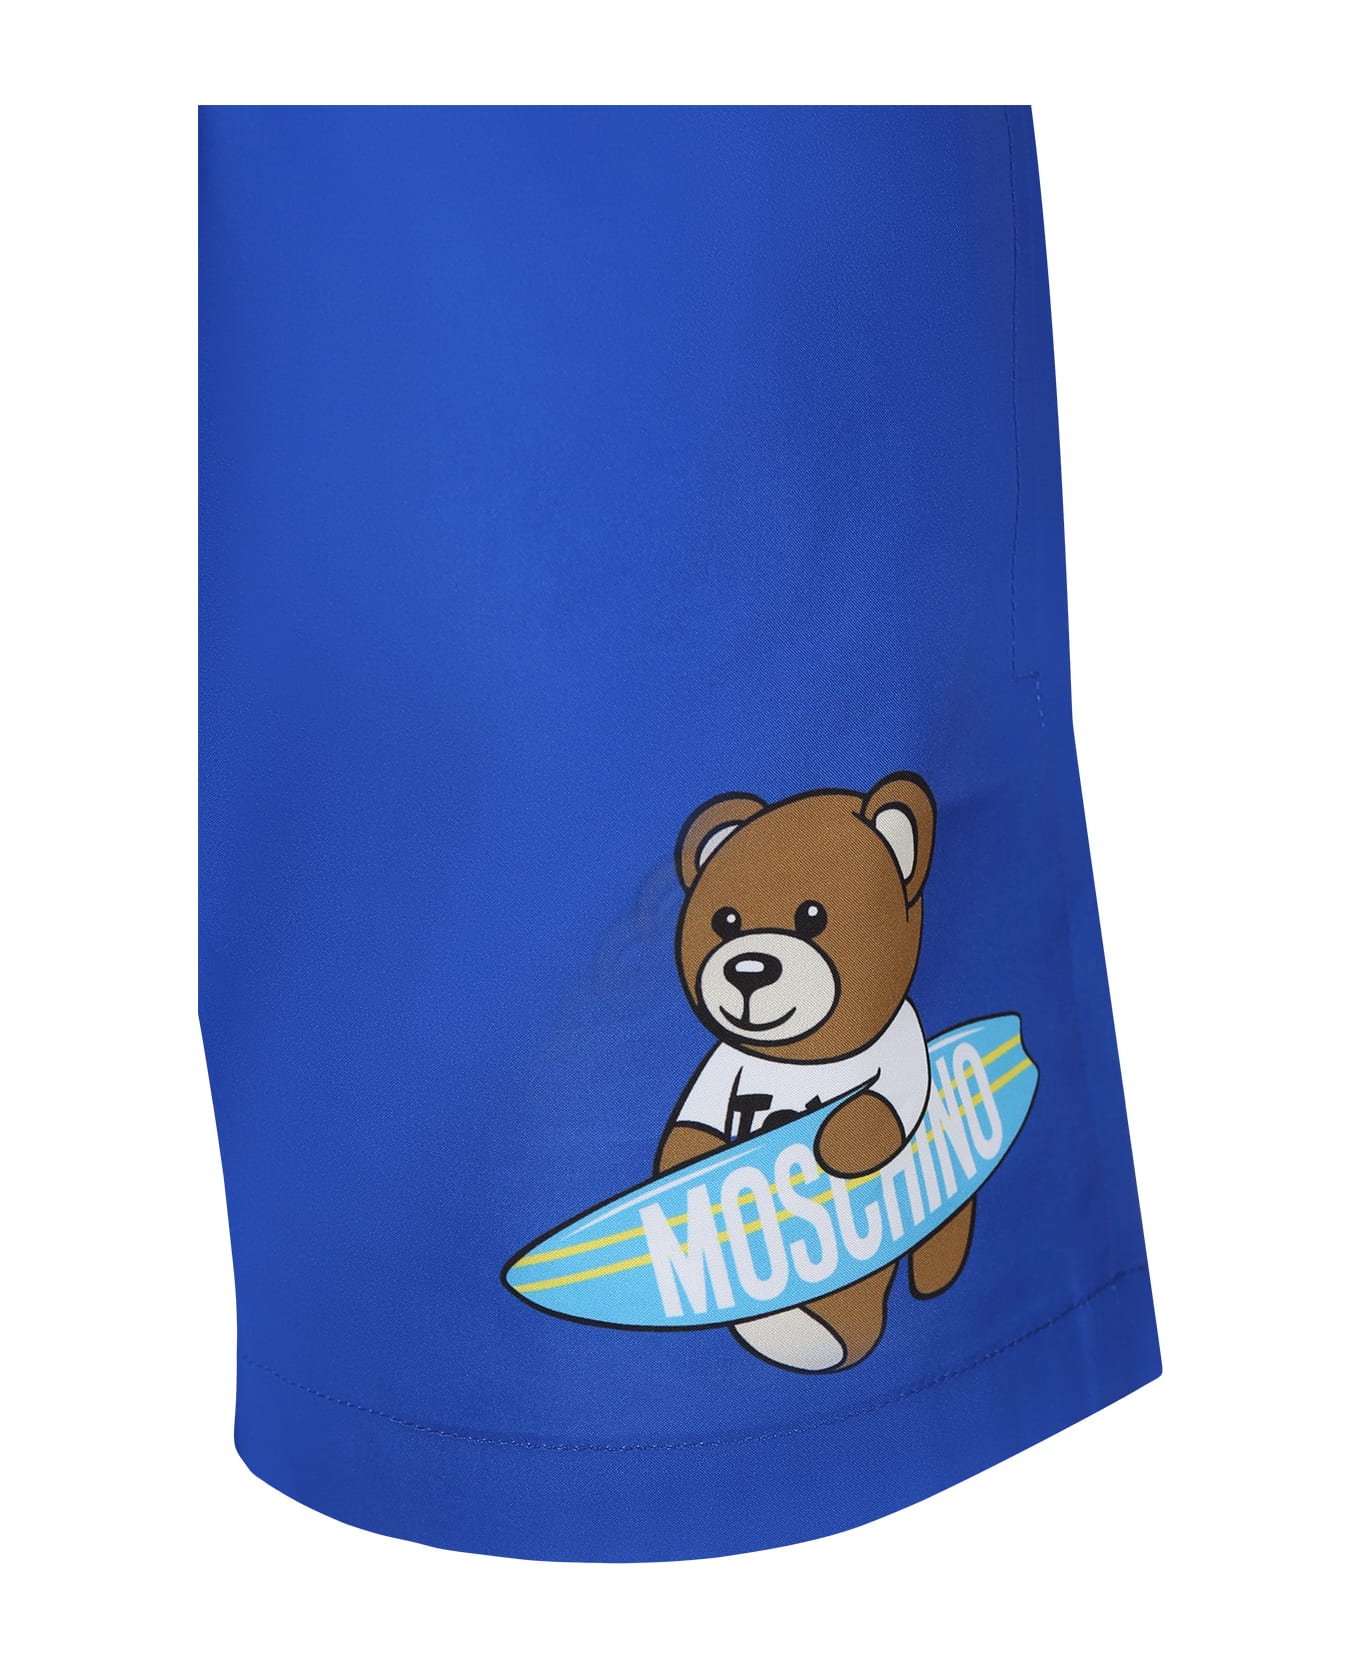 Moschino Light Blue Swim Shorts For Boy With Teddy Bear - Light Blue